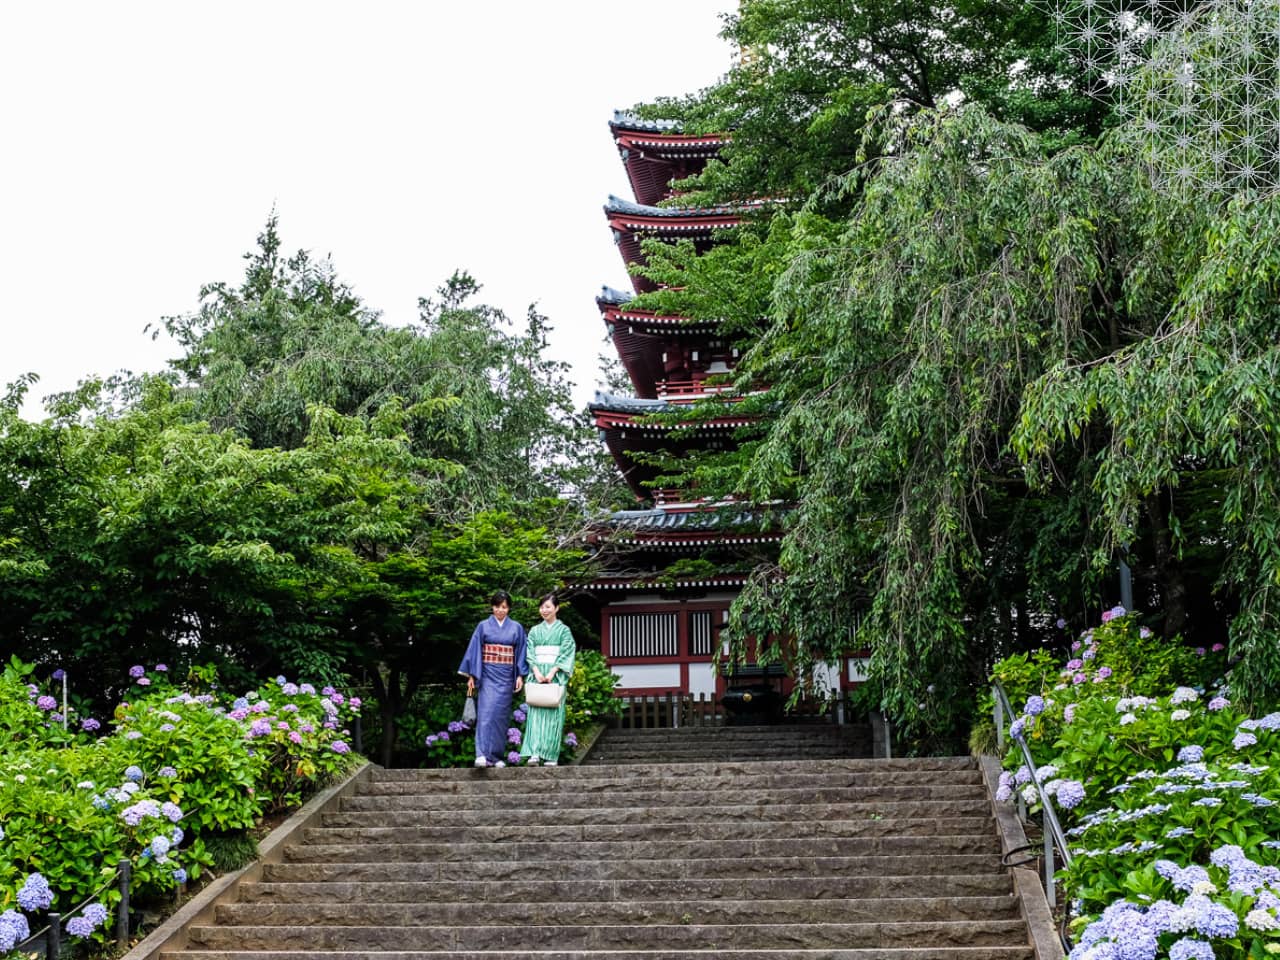 Hodoji Temple pagoda with hudrangeas and women clad in kimono